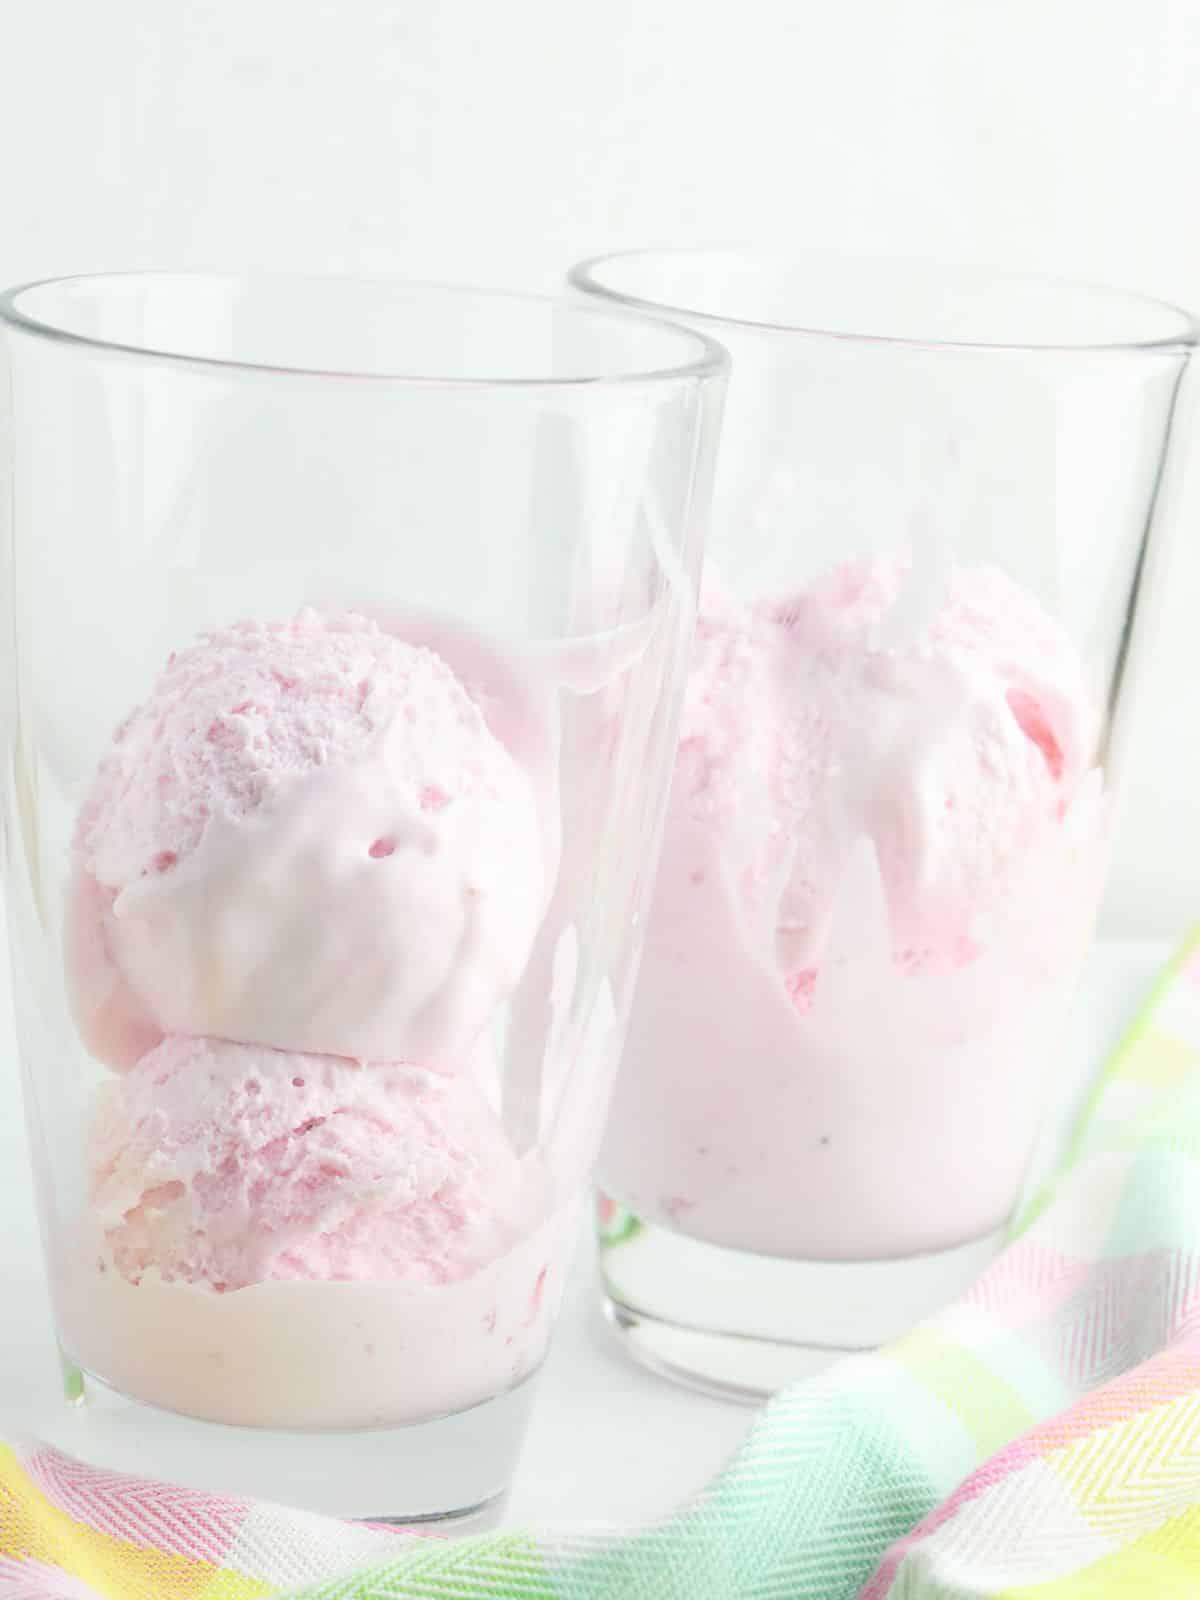 strawberry ice cream in glass cups.